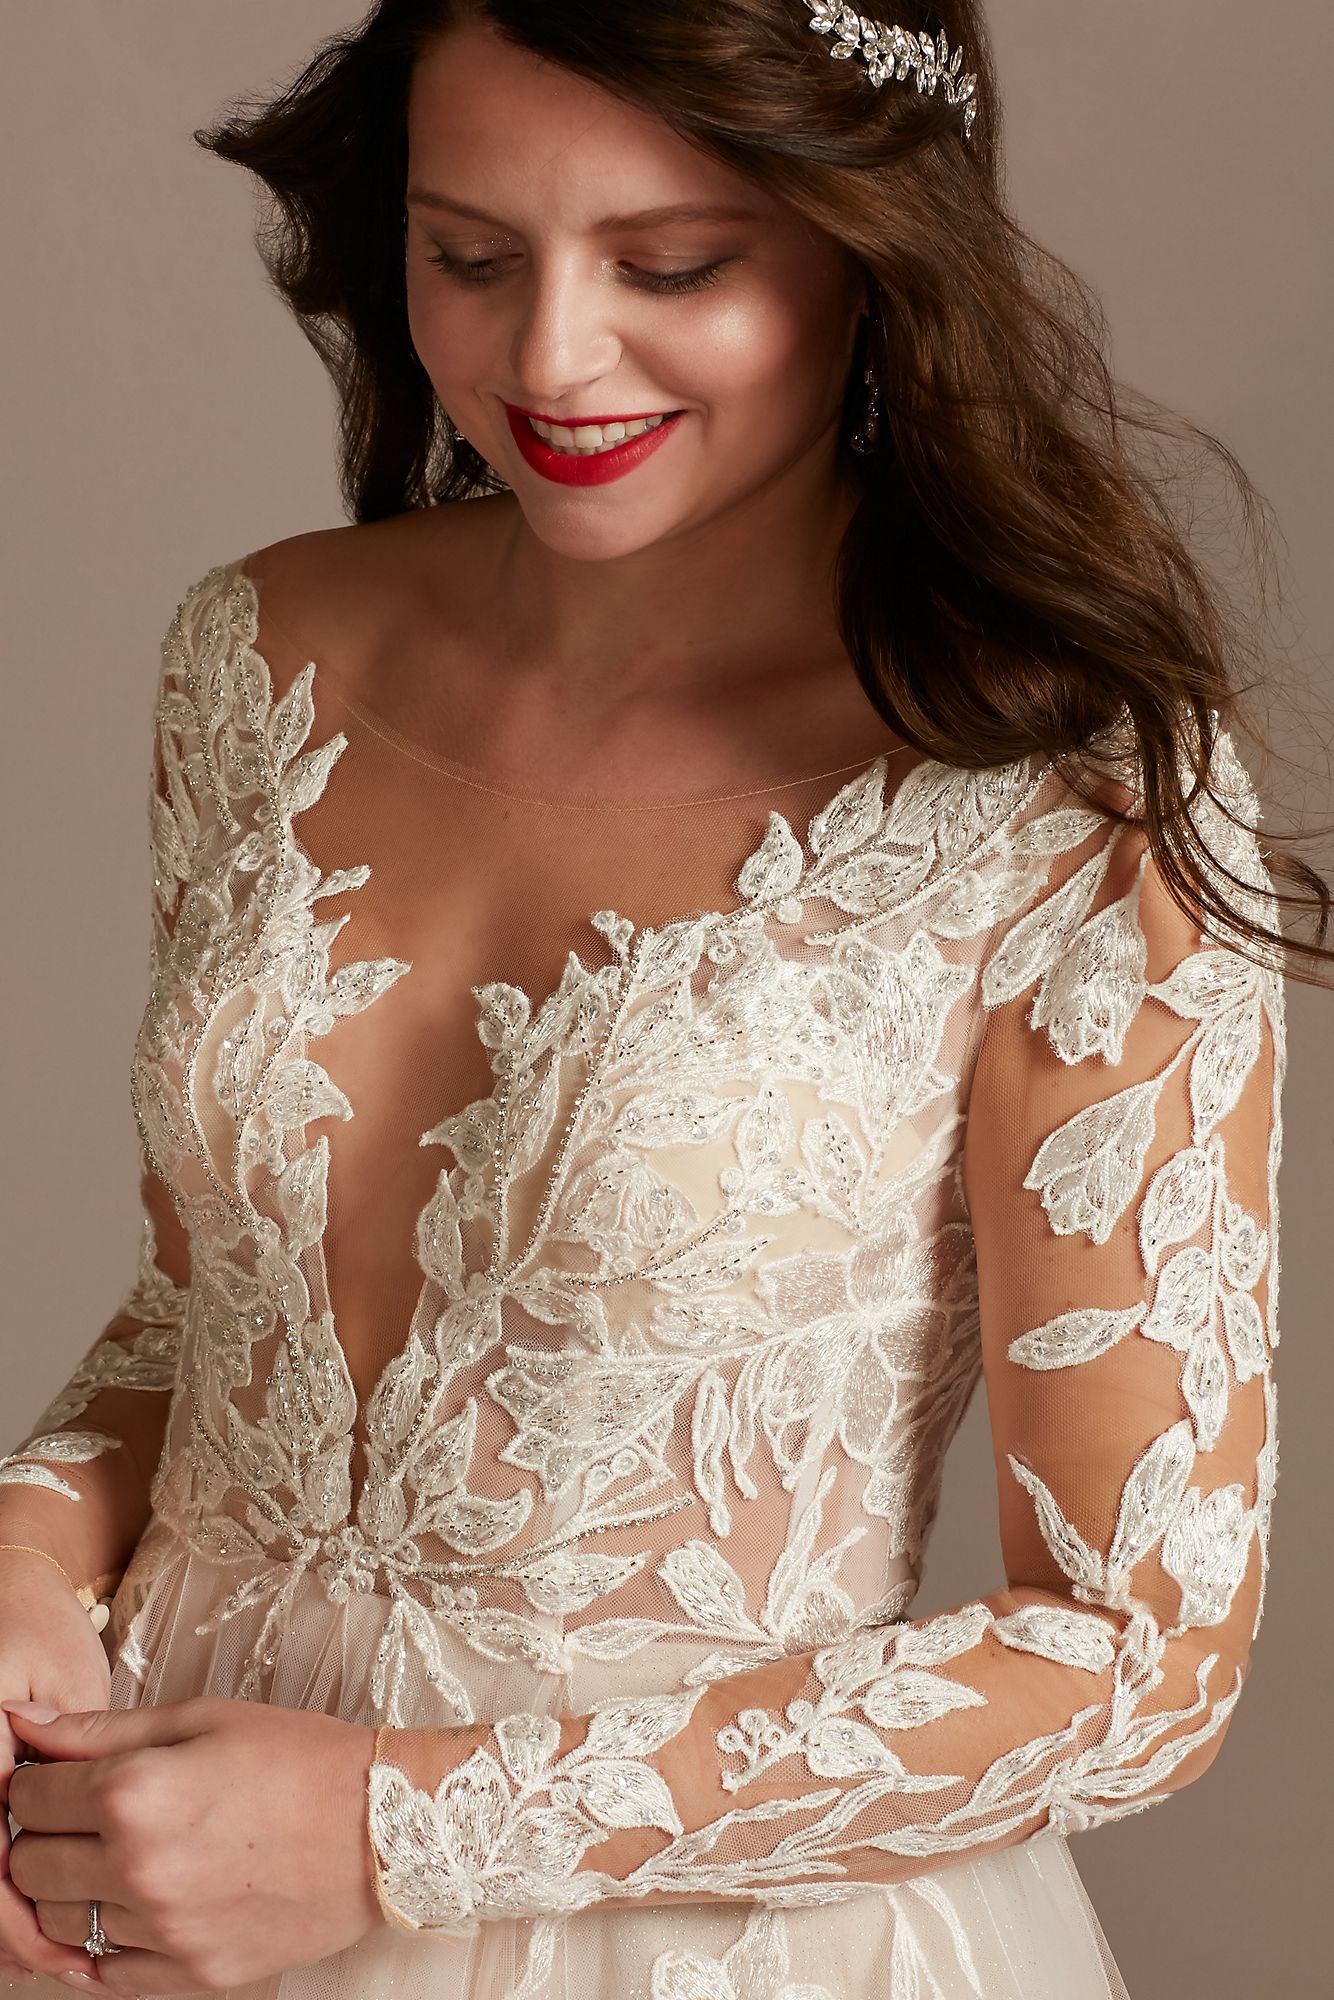 Long Sleeve Lace Appliqued Petite Wedding Dress Galina Signature 7SLSWG862